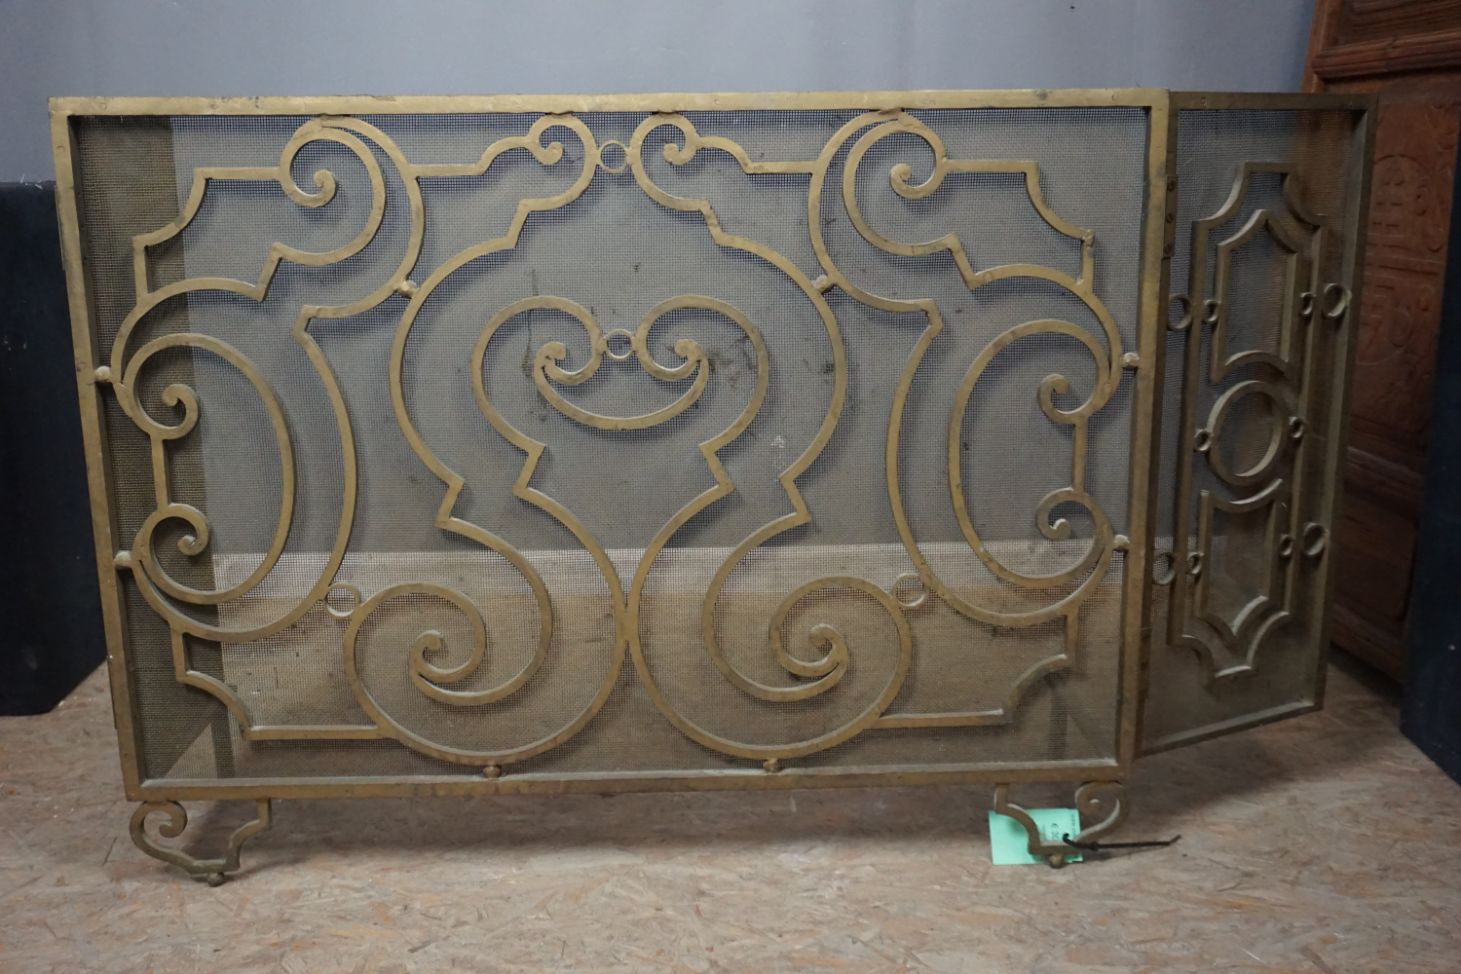 Fireplace screen in bronze H72X93